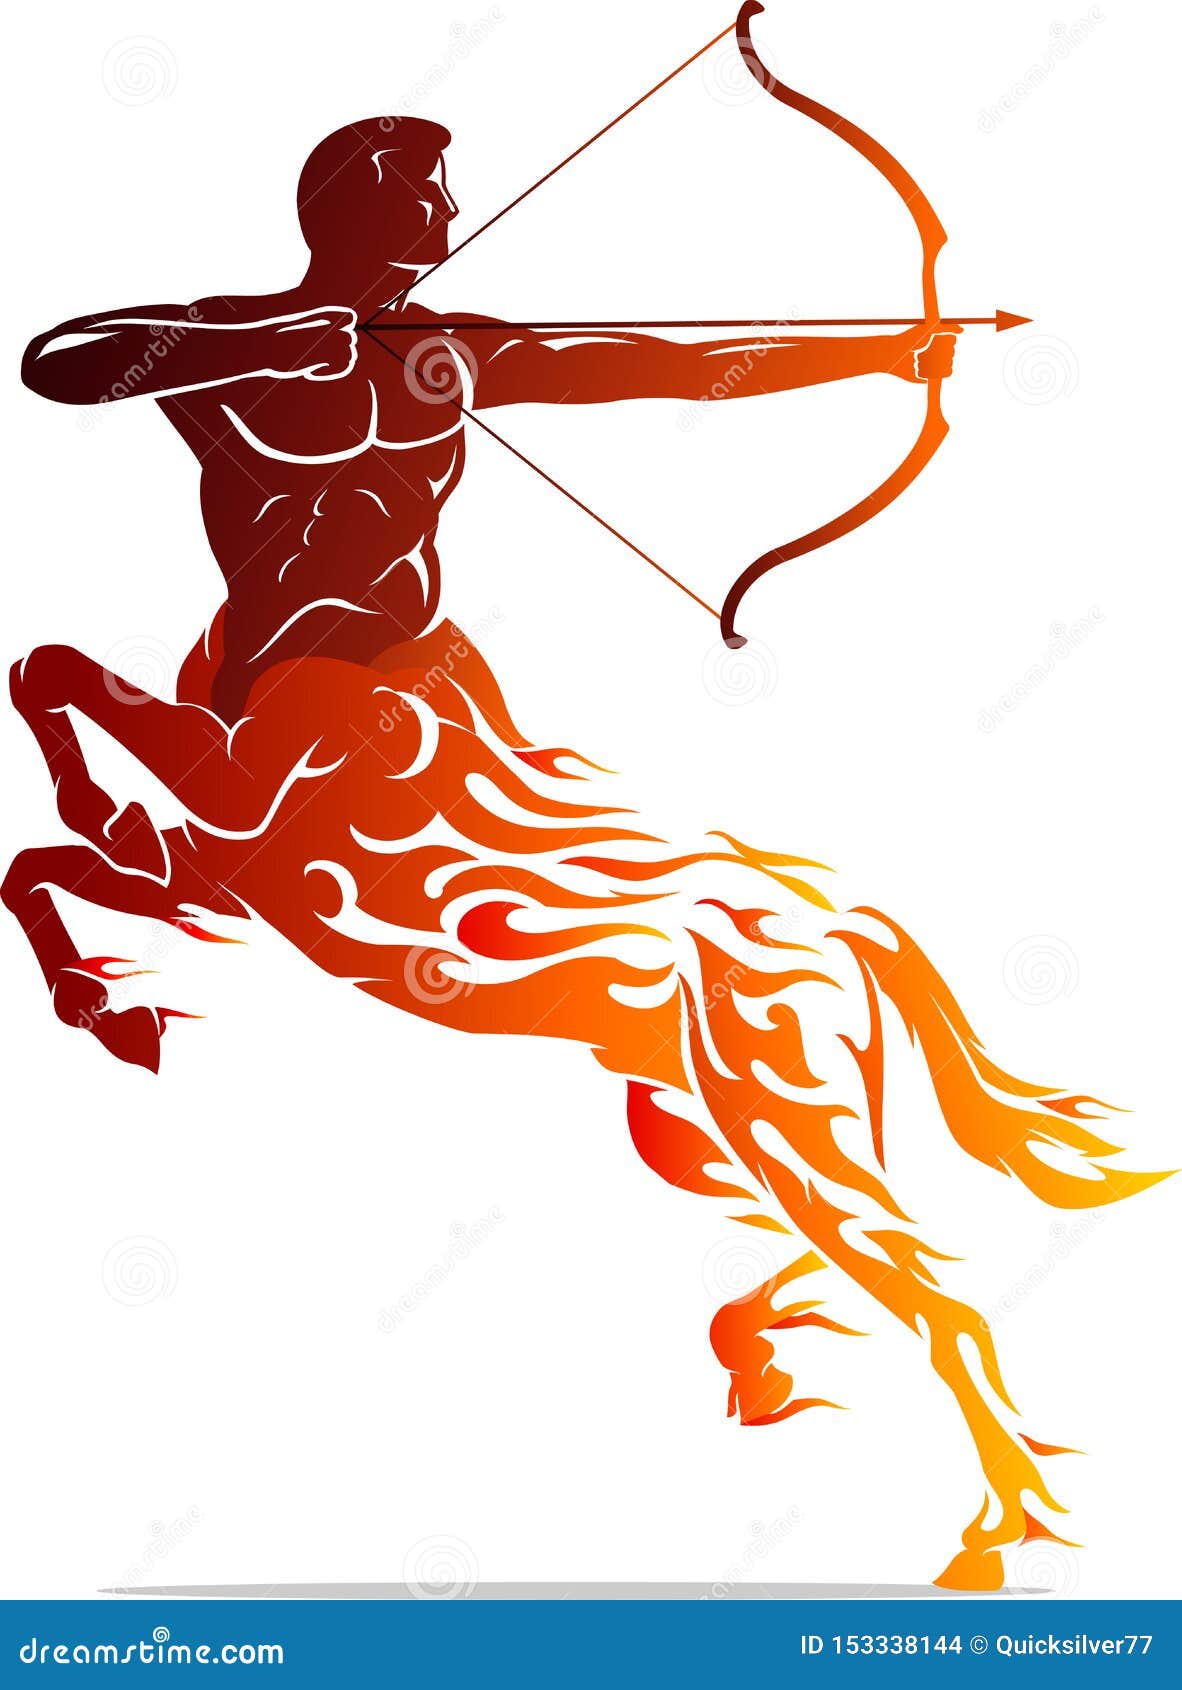 Centaur Flame Archer Tattoo Stock Vector  Illustration of full design  153338144